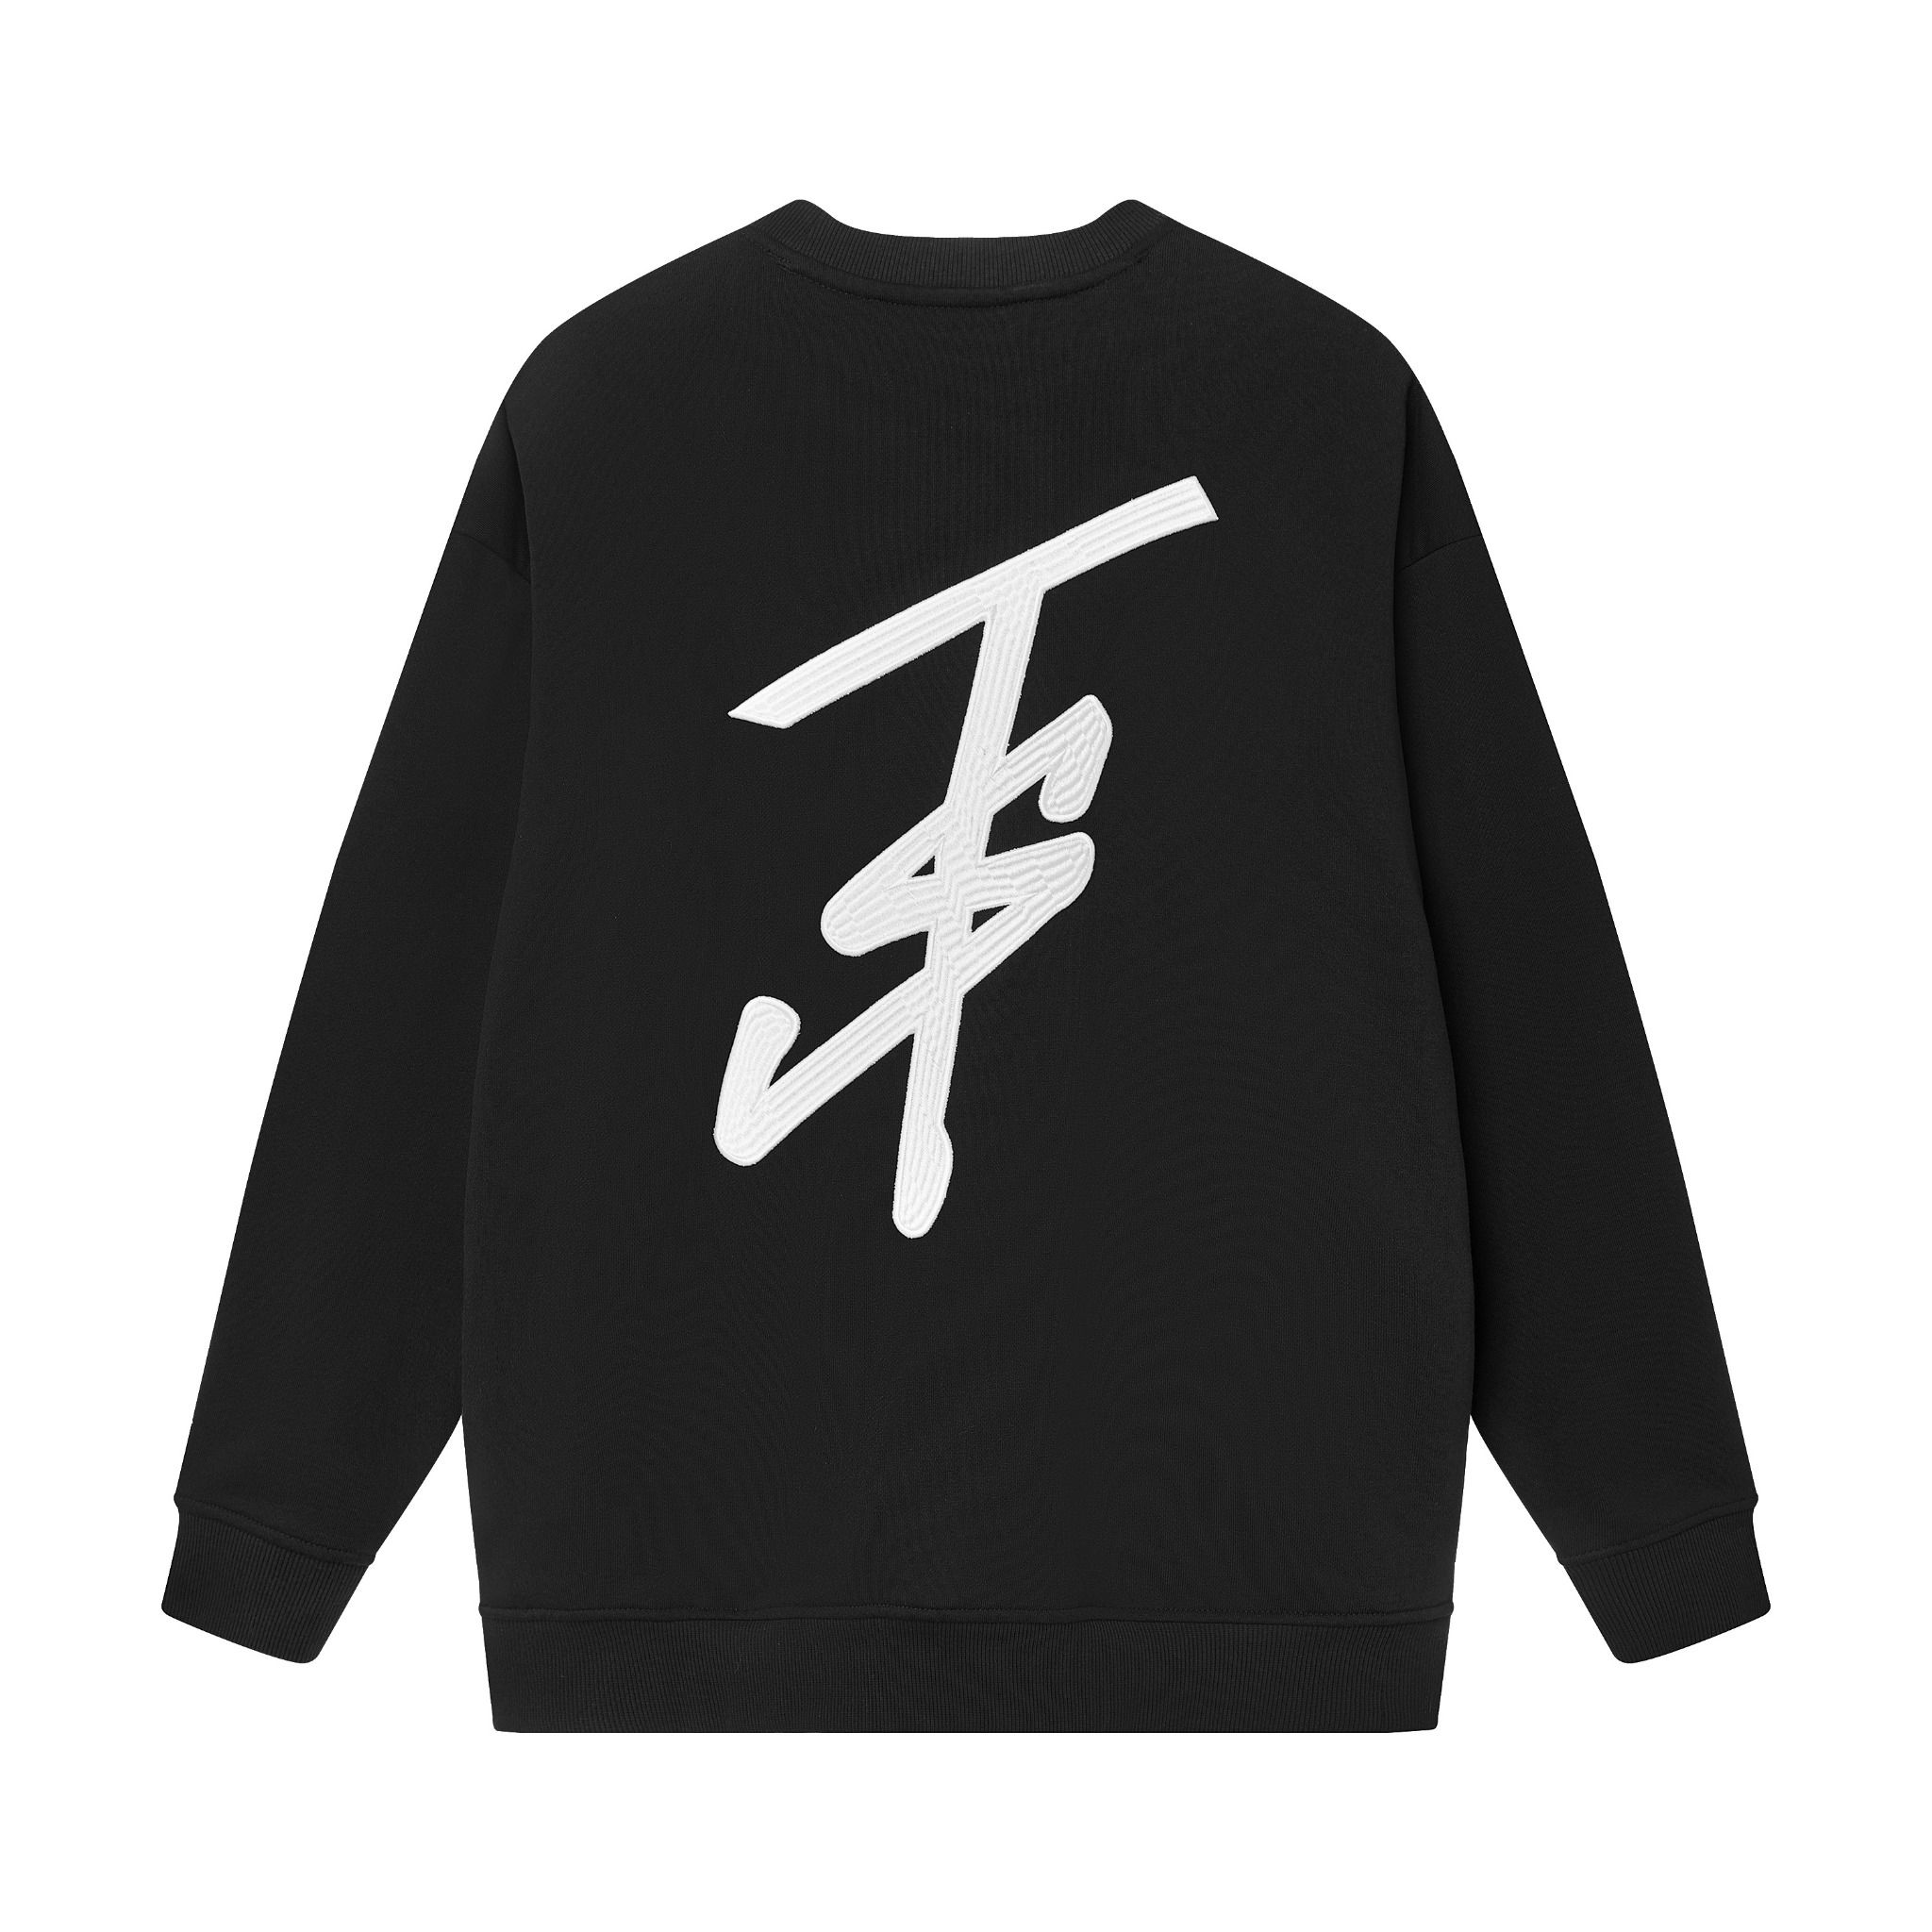  TSUN Big Logo Sweater - Black 